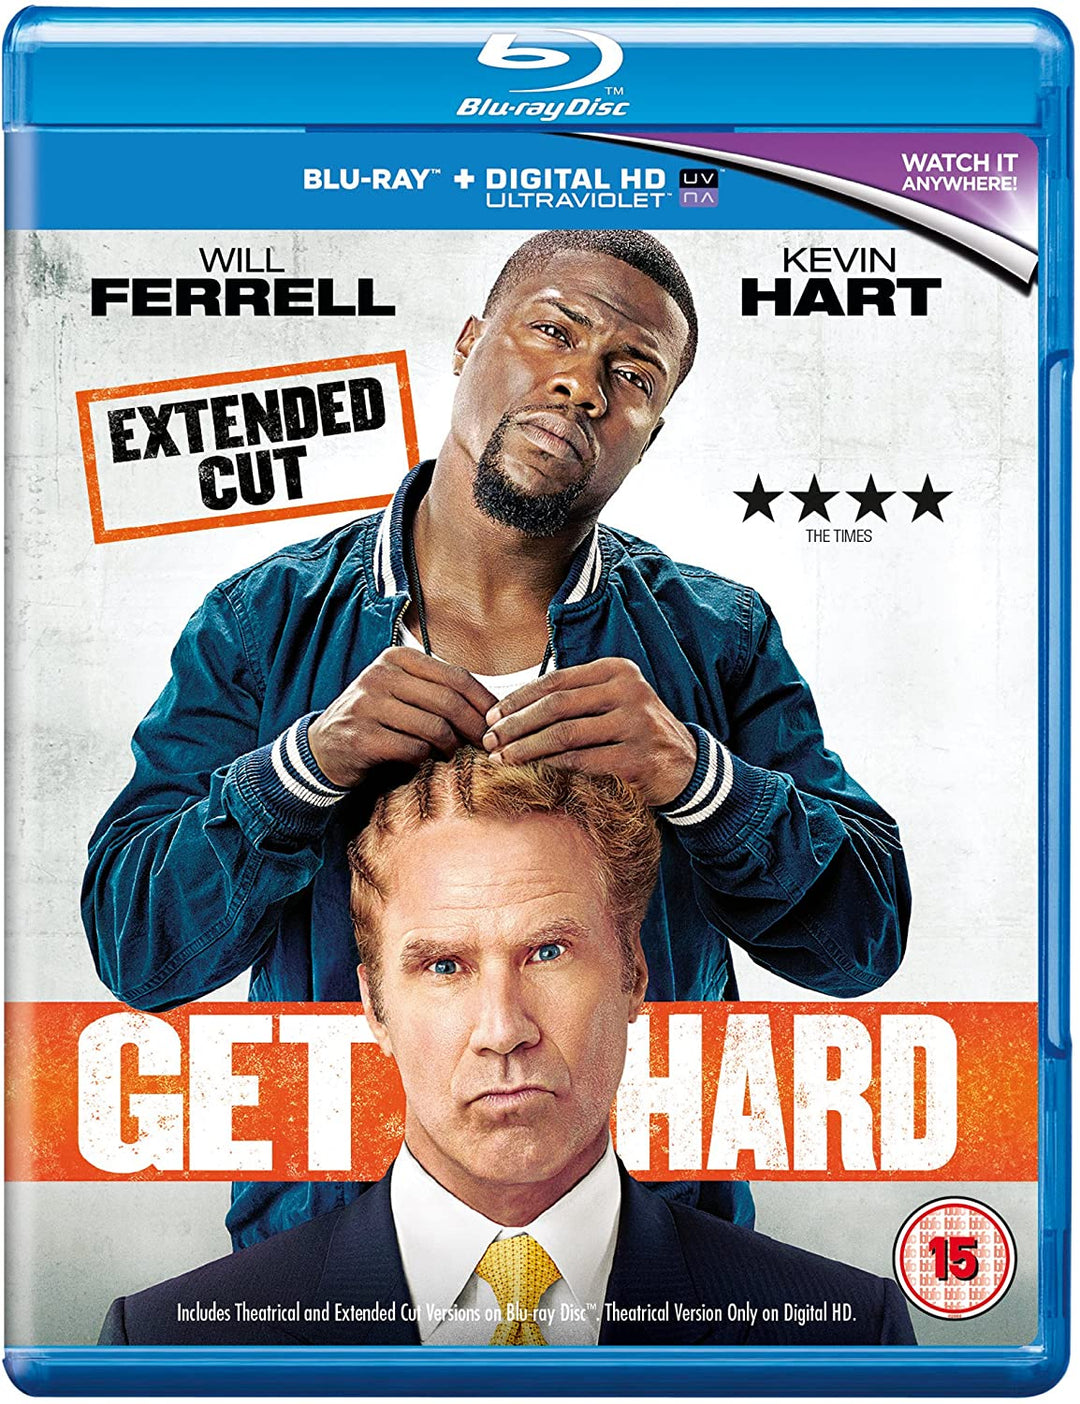 Get Hard [2015] [Region Free] [Blu-ray]